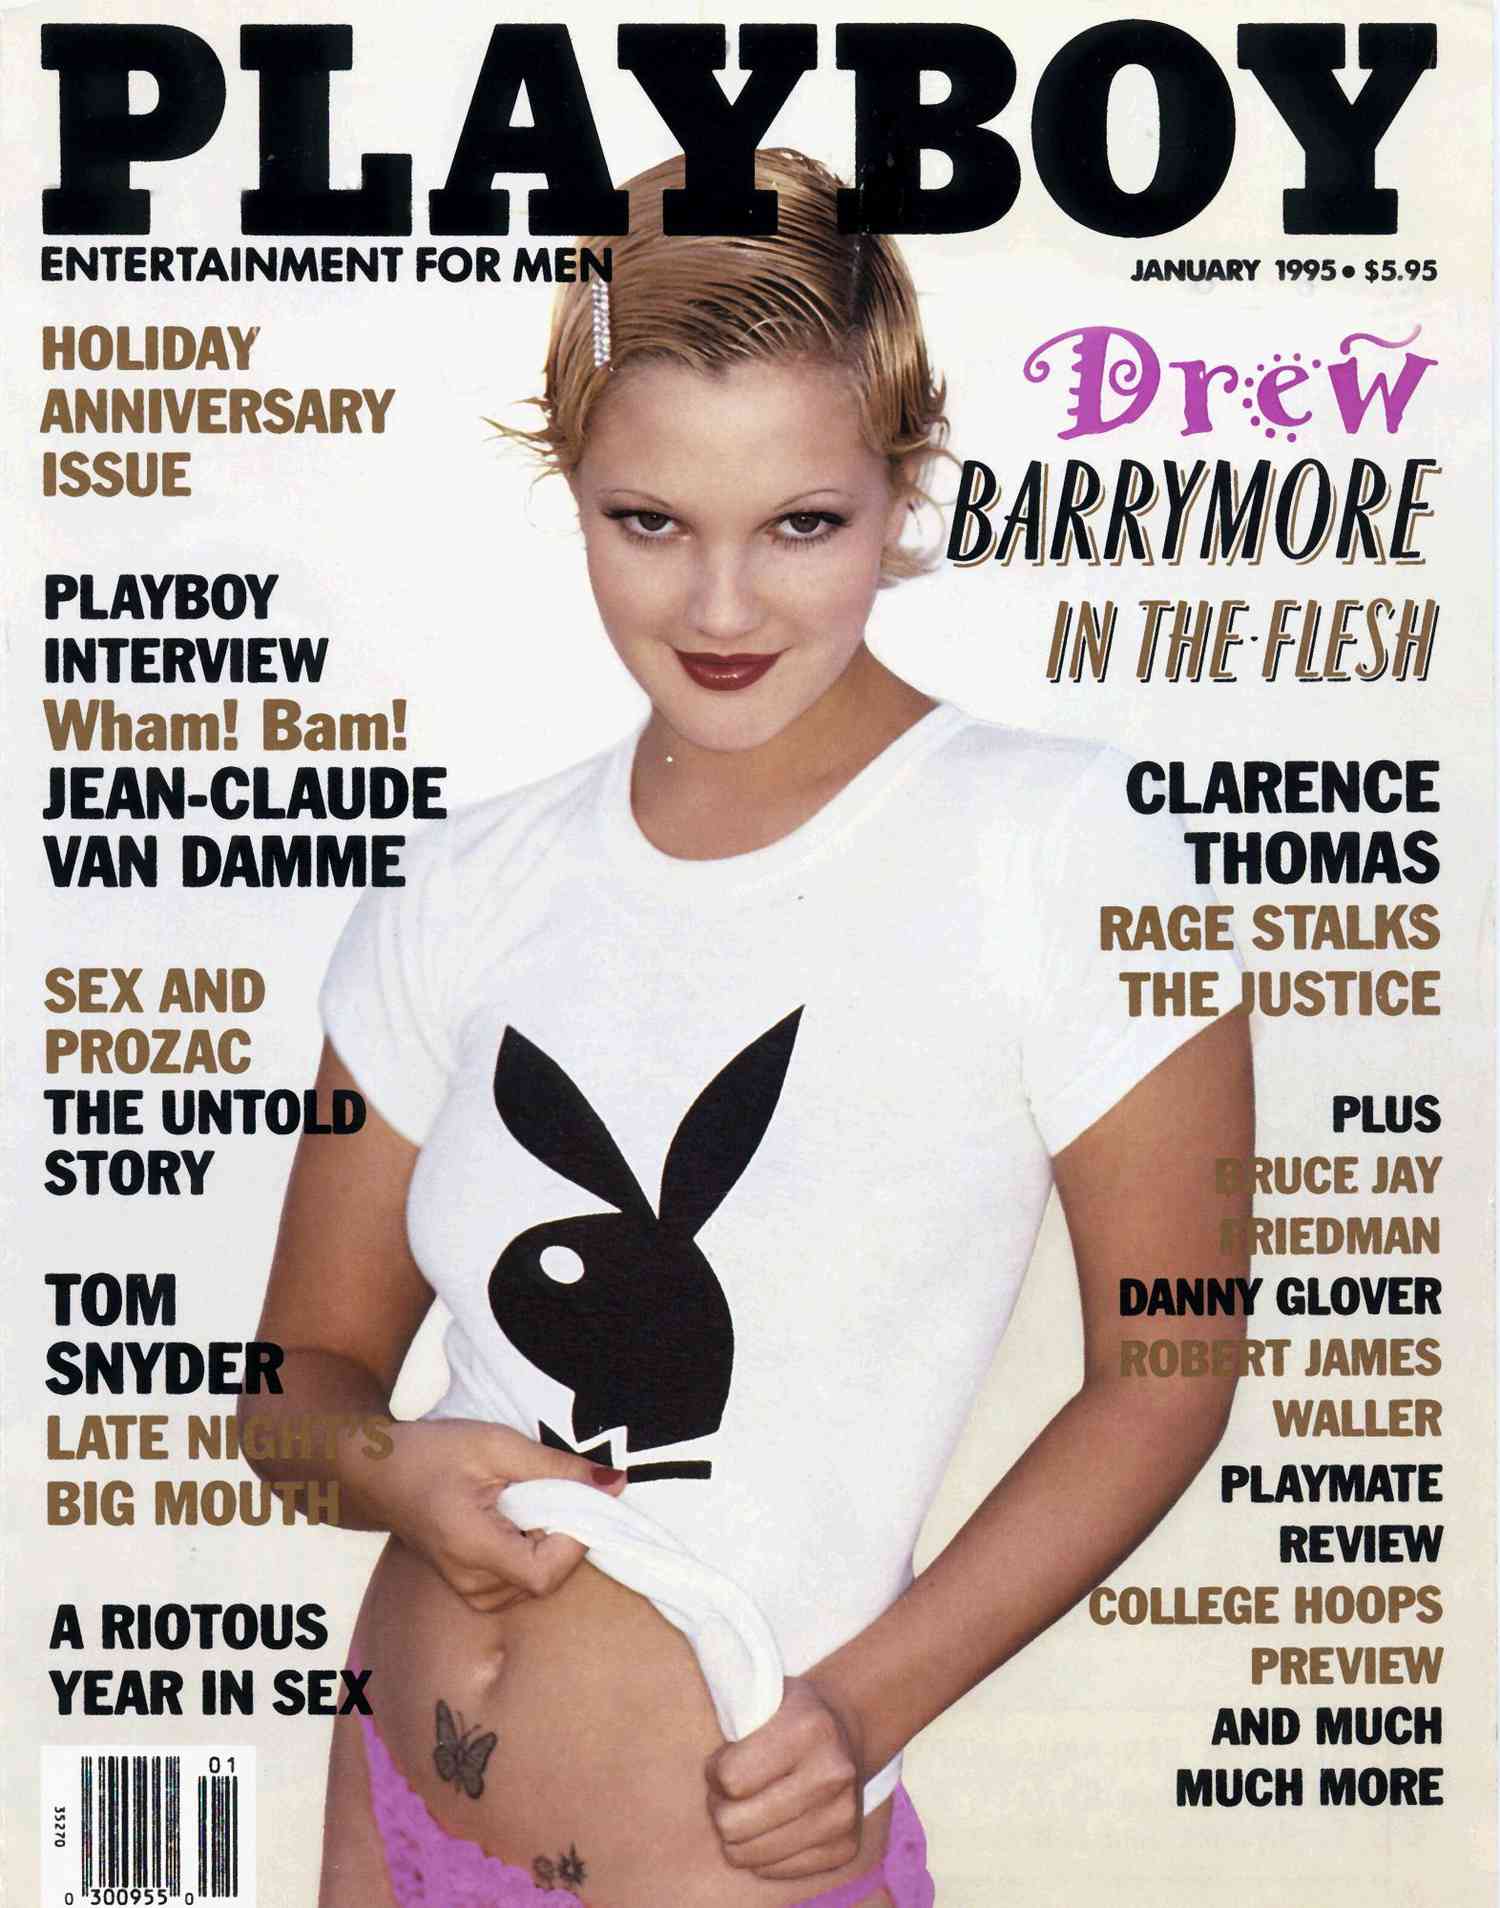 Playboy magazine drops nudity